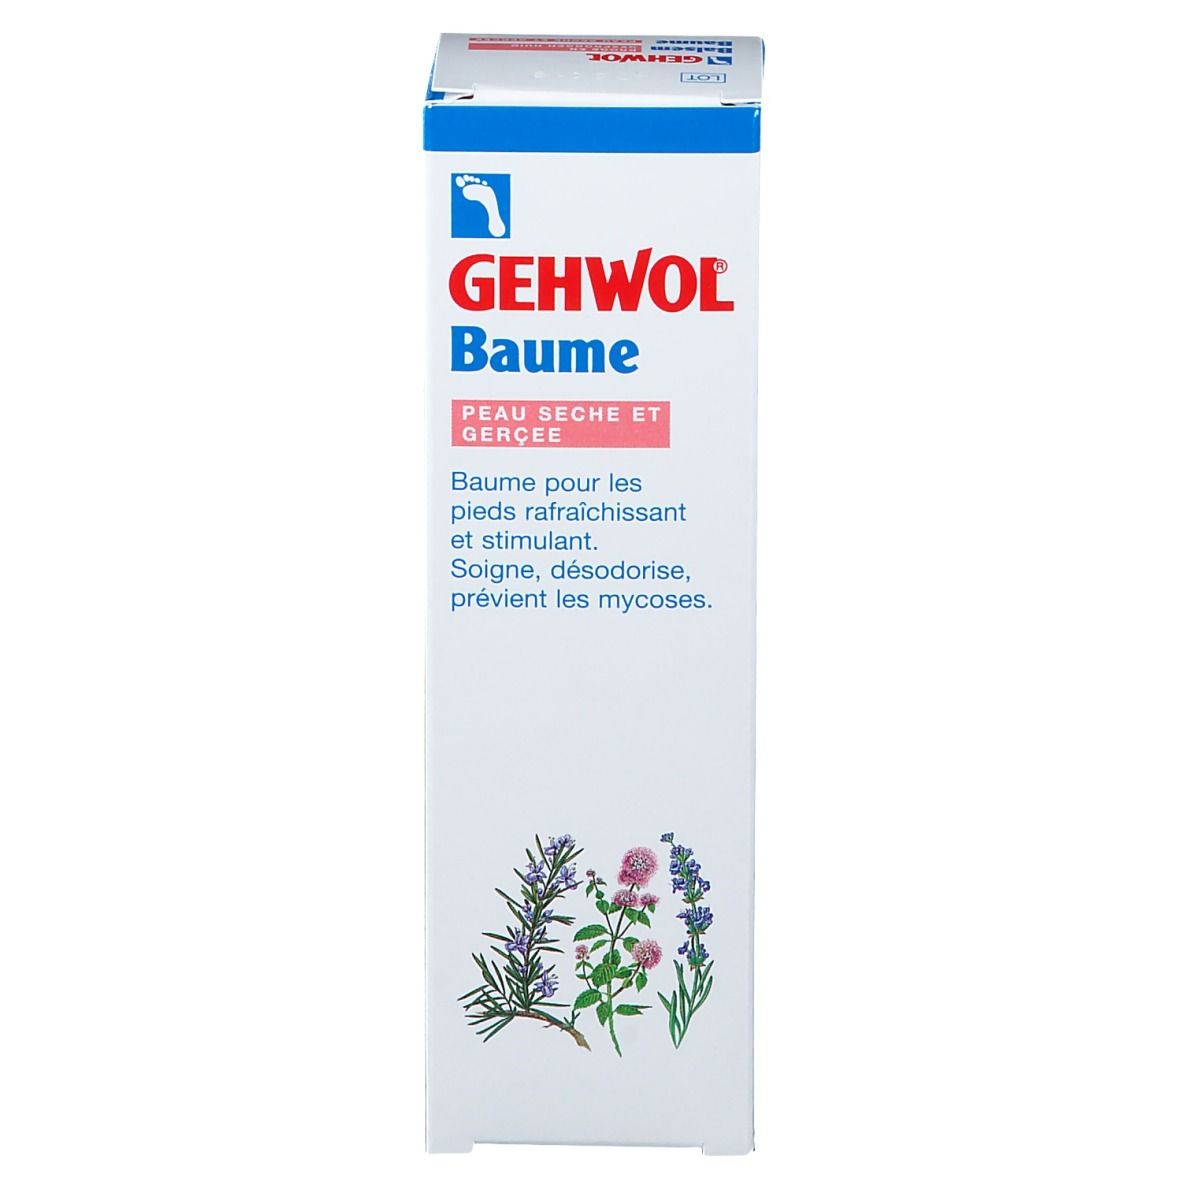 Gehwol® Balsamo pelle secca e fragile